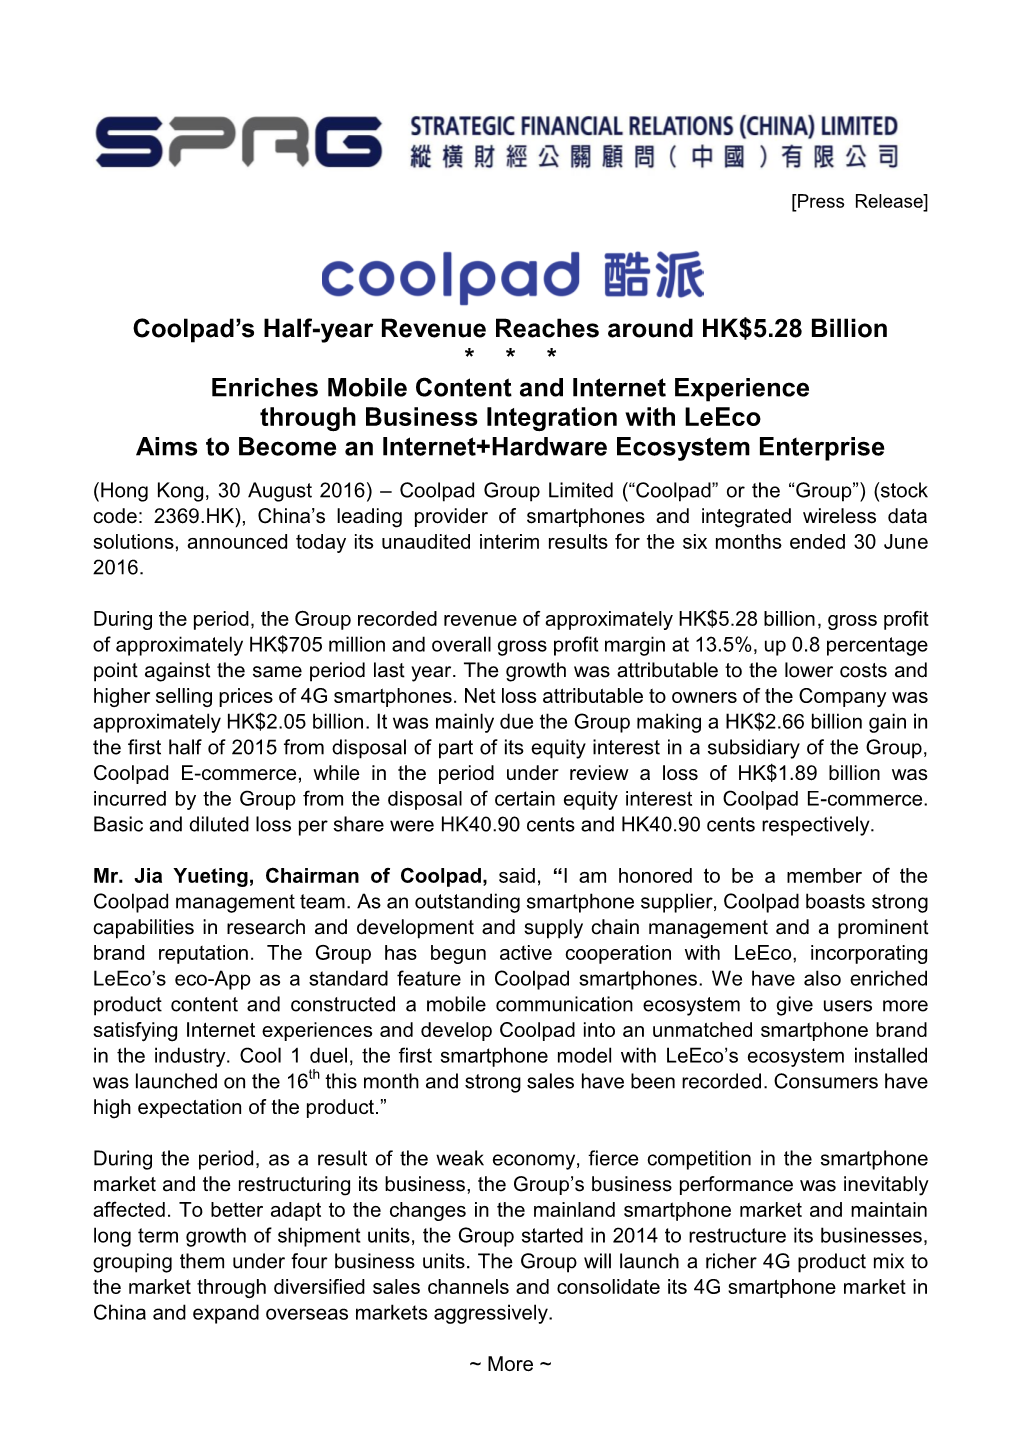 Coolpad's Half-Year Revenue Reaches Around HK$5.28 Billion